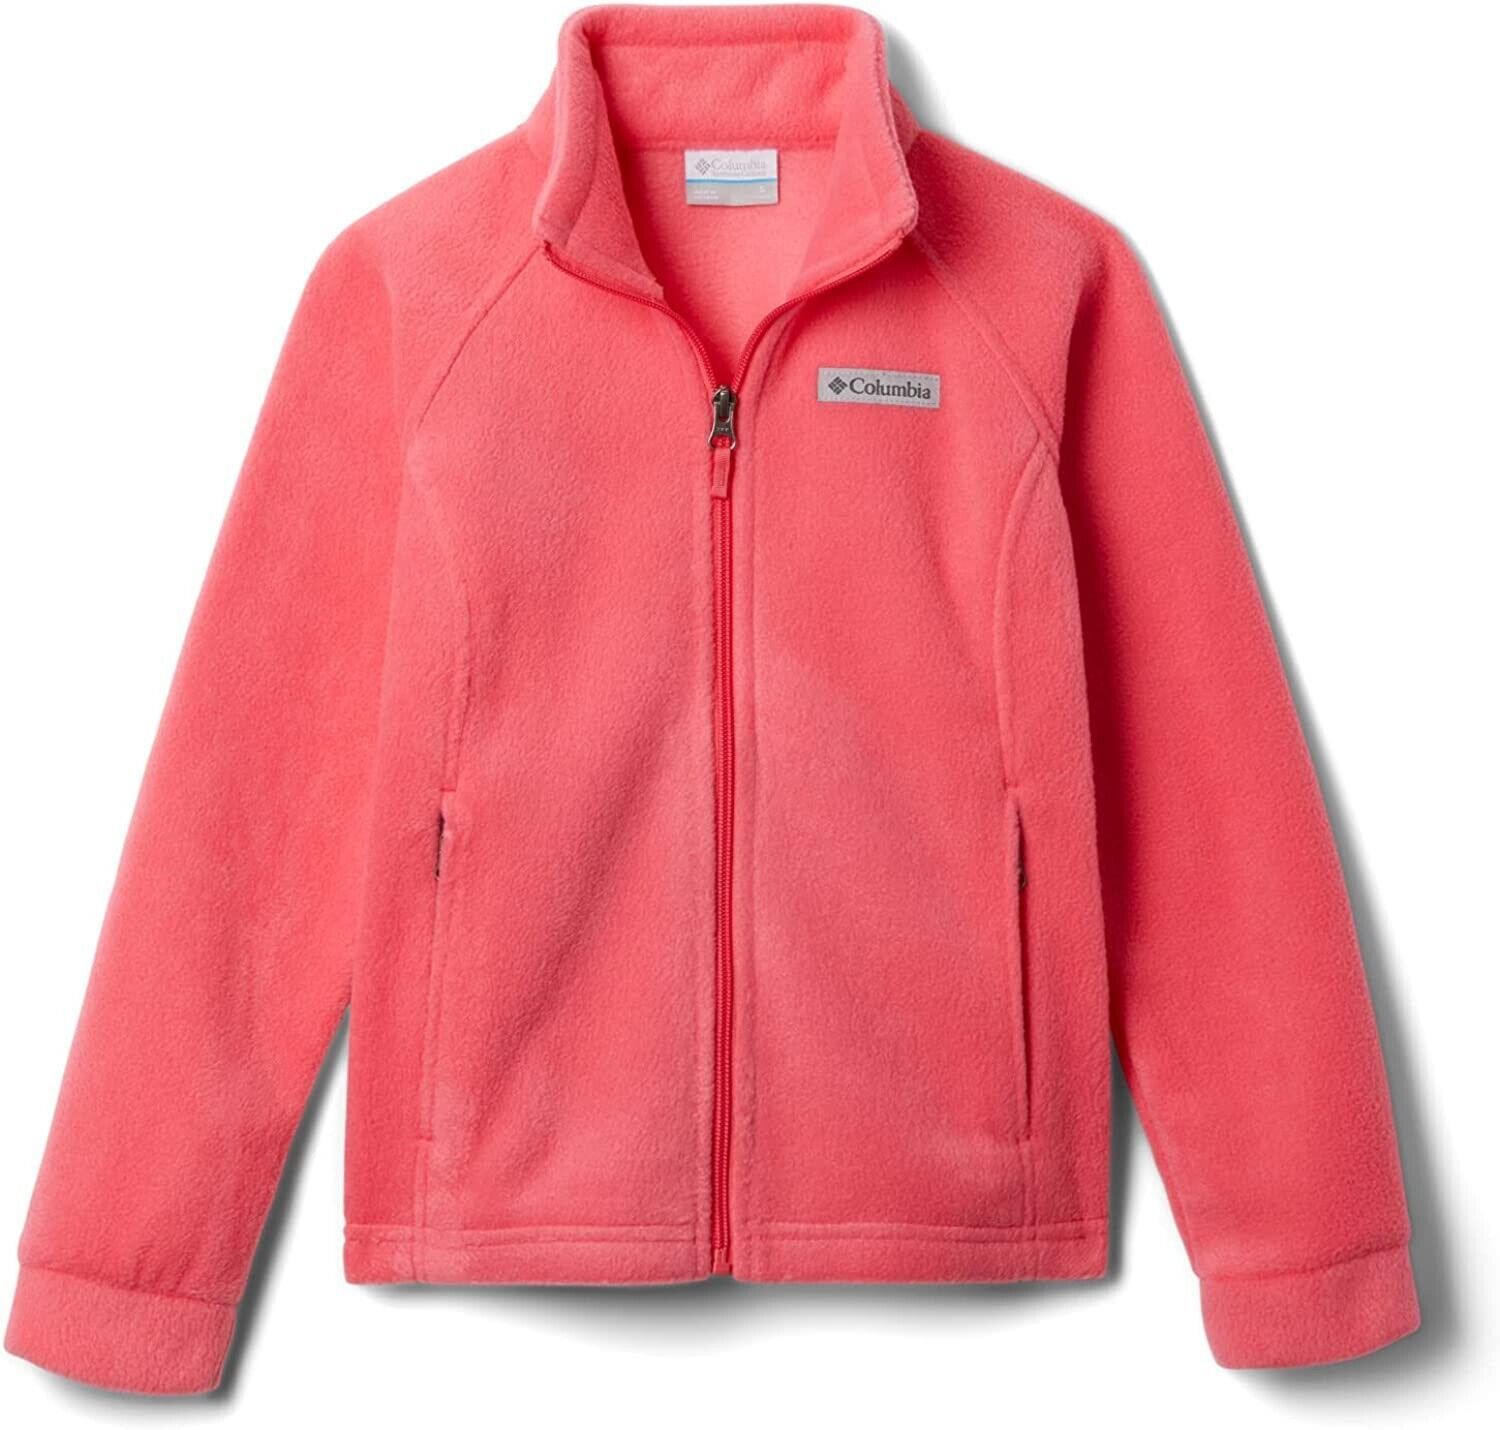 Primary image for Columbia Baby Benton Springs Fleece Jacket, Bright Geranium, Youth 6/12 Month